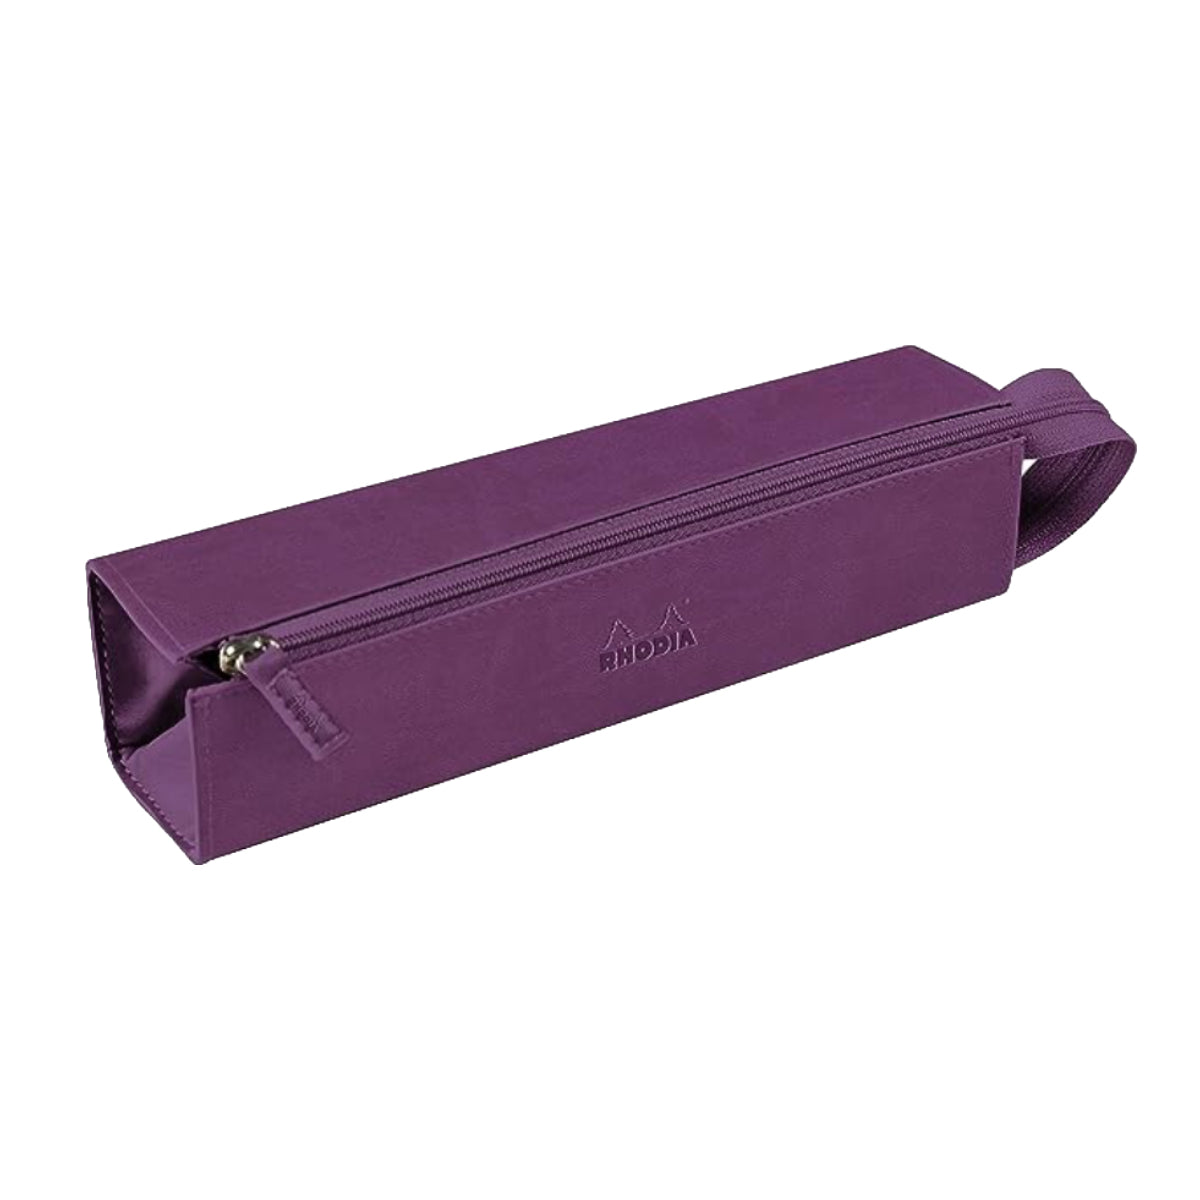 RHODIA rhodiarama Square Pencil Case with Zipper, PU Leather, 230 x 50 mm, Violet